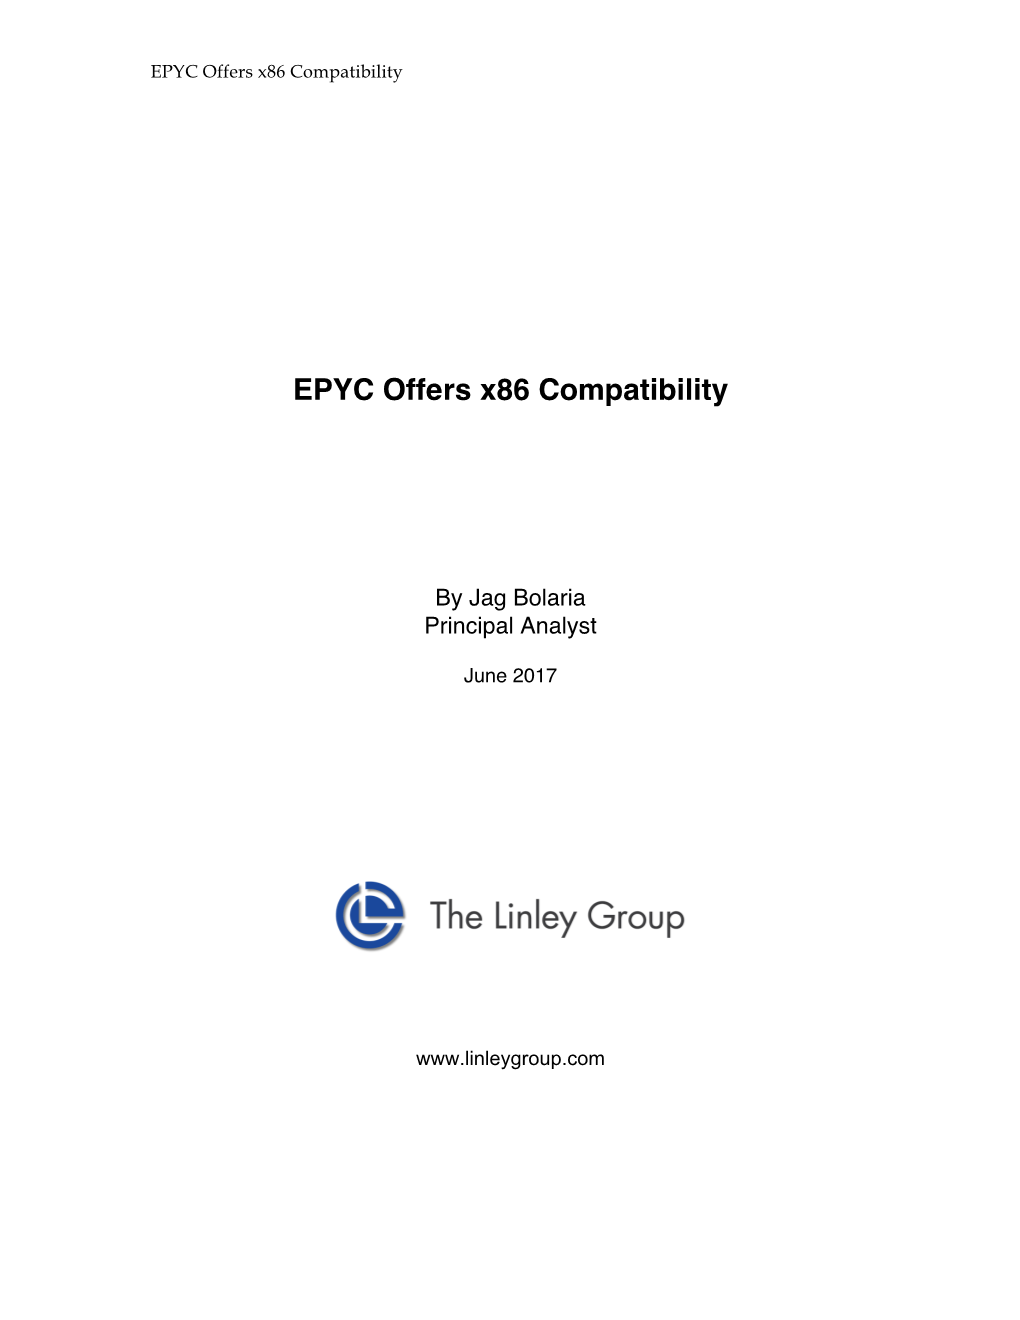 EPYC Offers X86 Compatibility